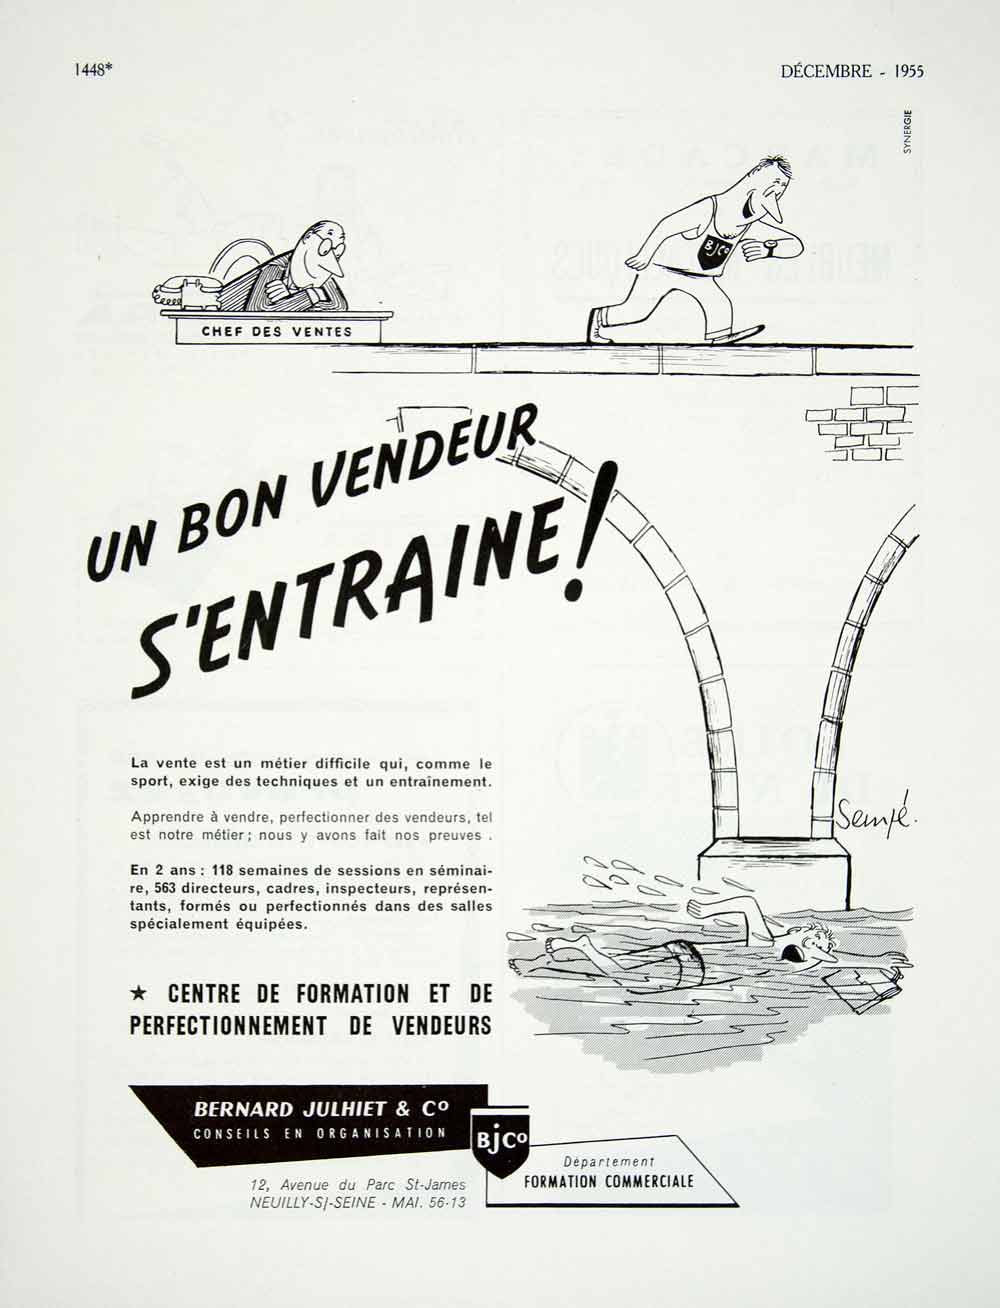 1955 Ad Sempe Bernard Julhiet French Advertising Training Vendors Swimming VEN6